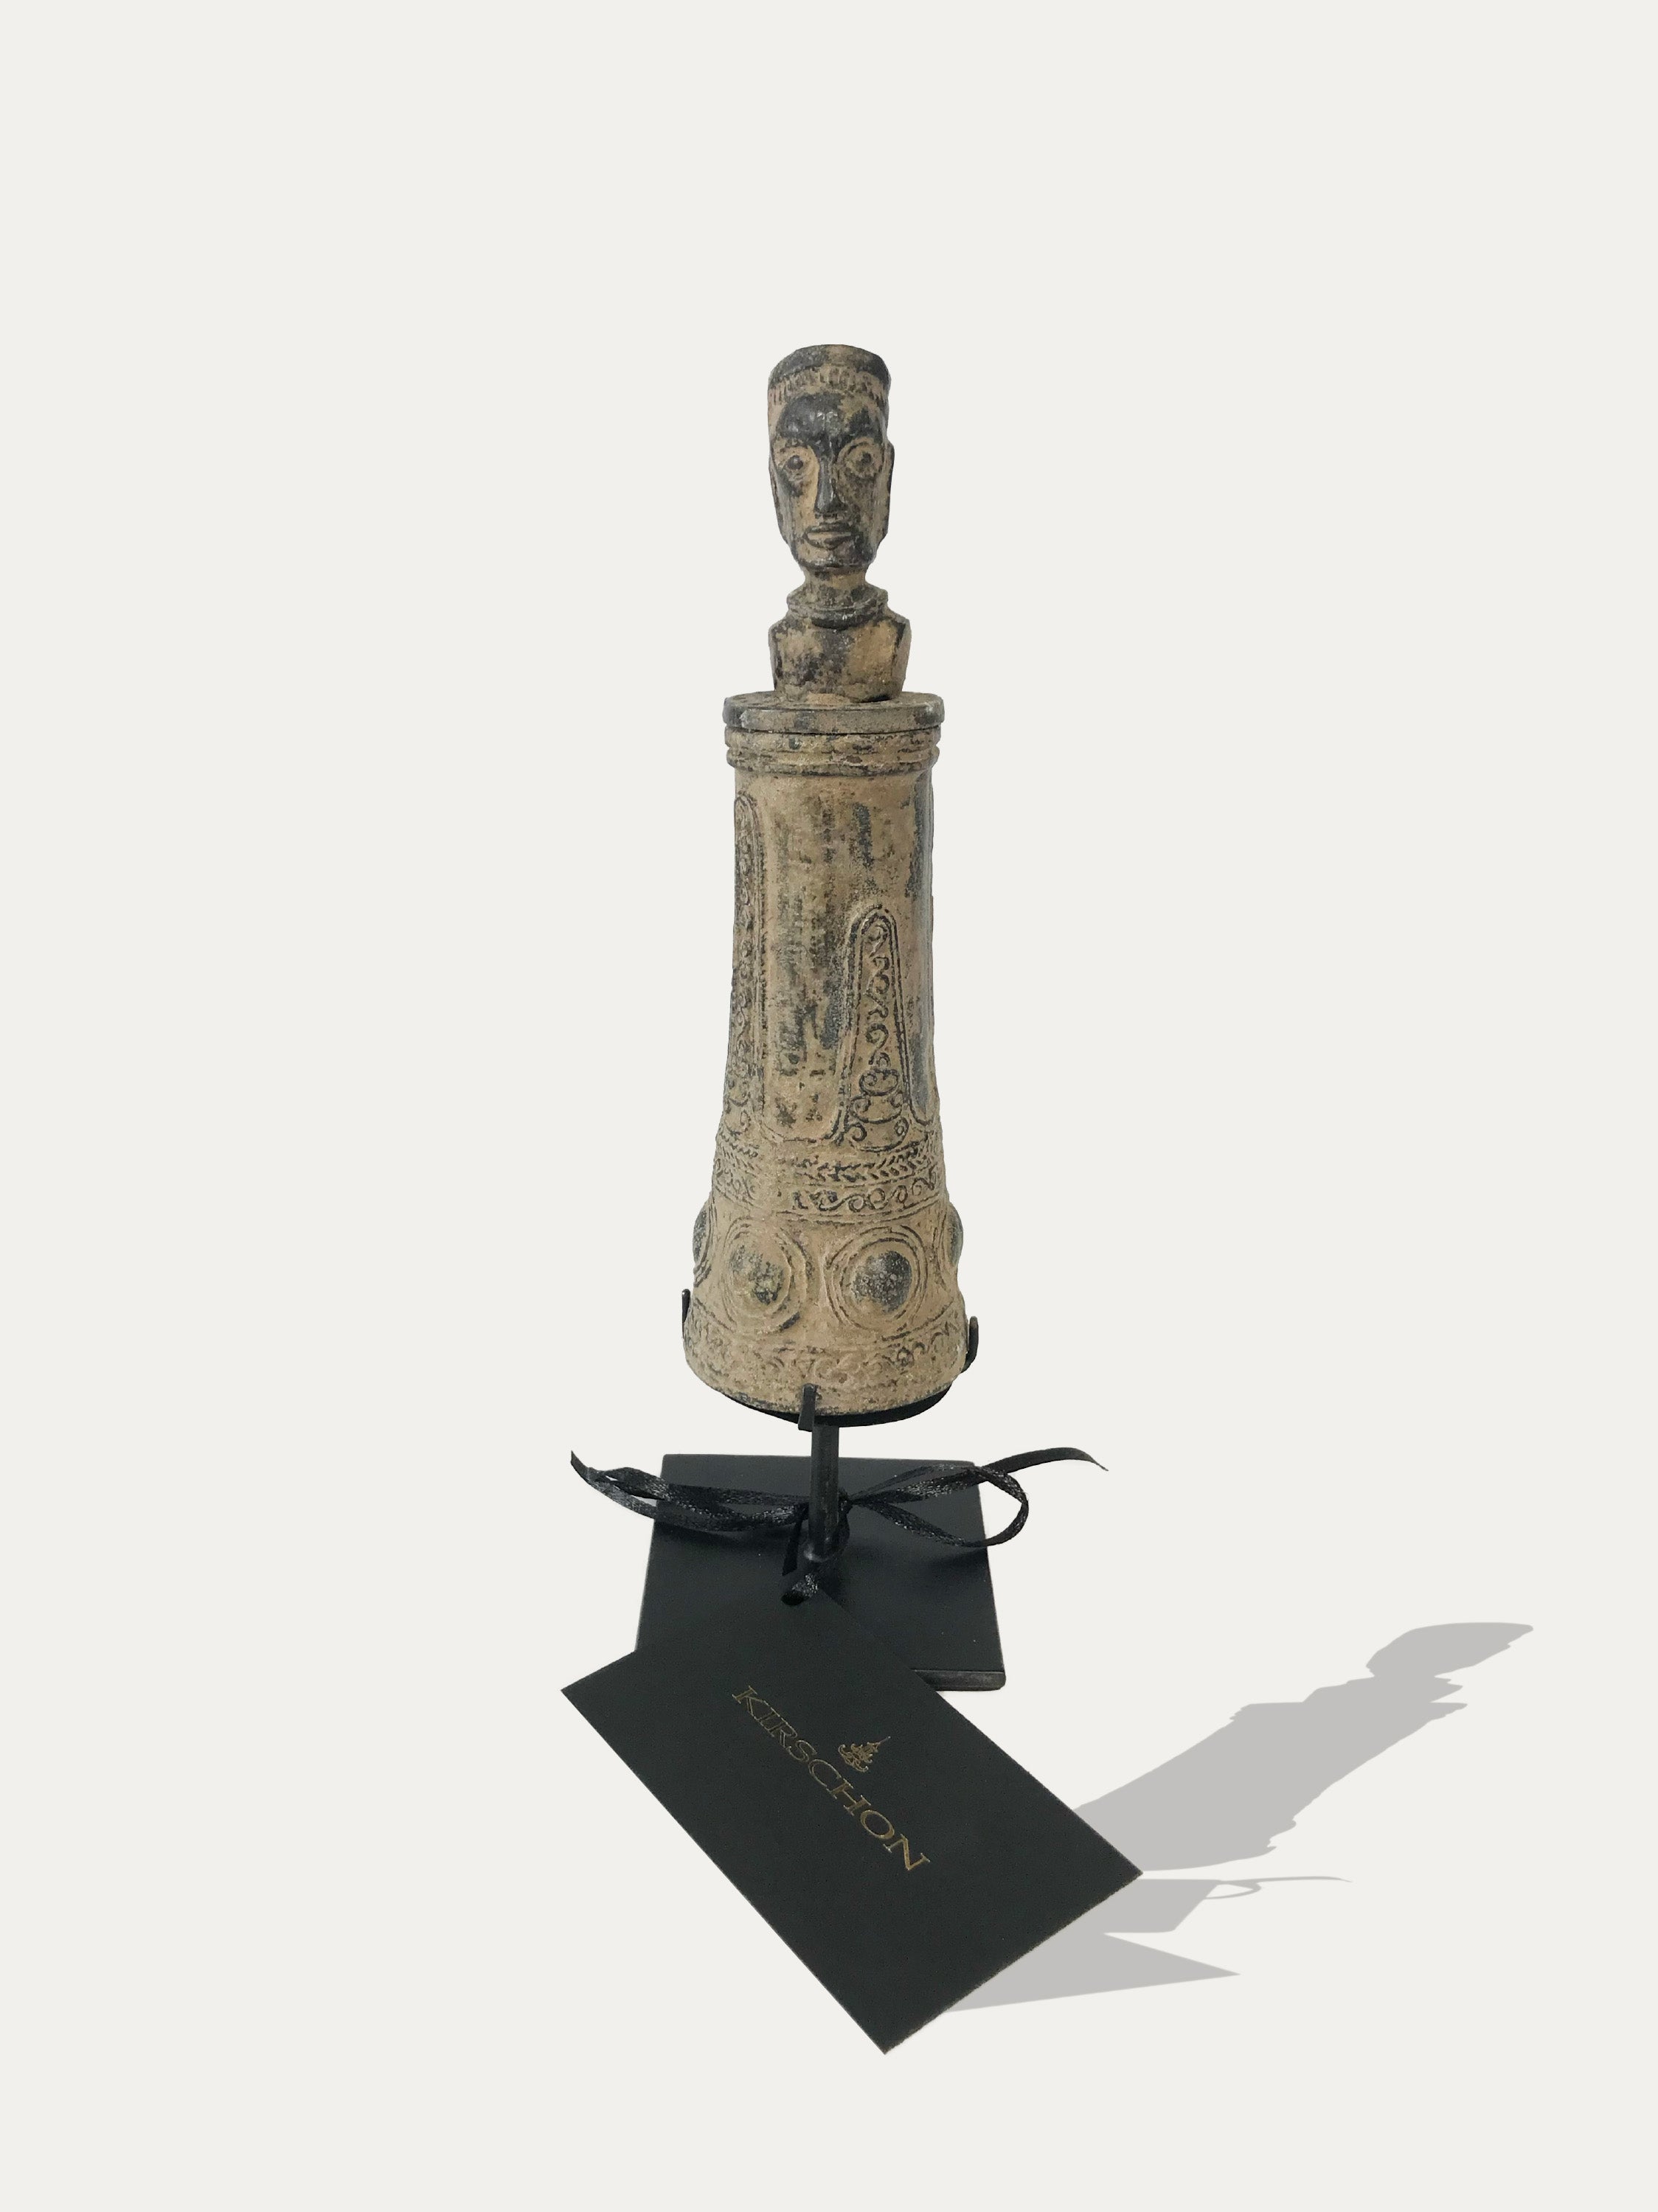 Tempat Kapur - Medicine bottle from the Tanimbar islands - Asian Art from Kirschon